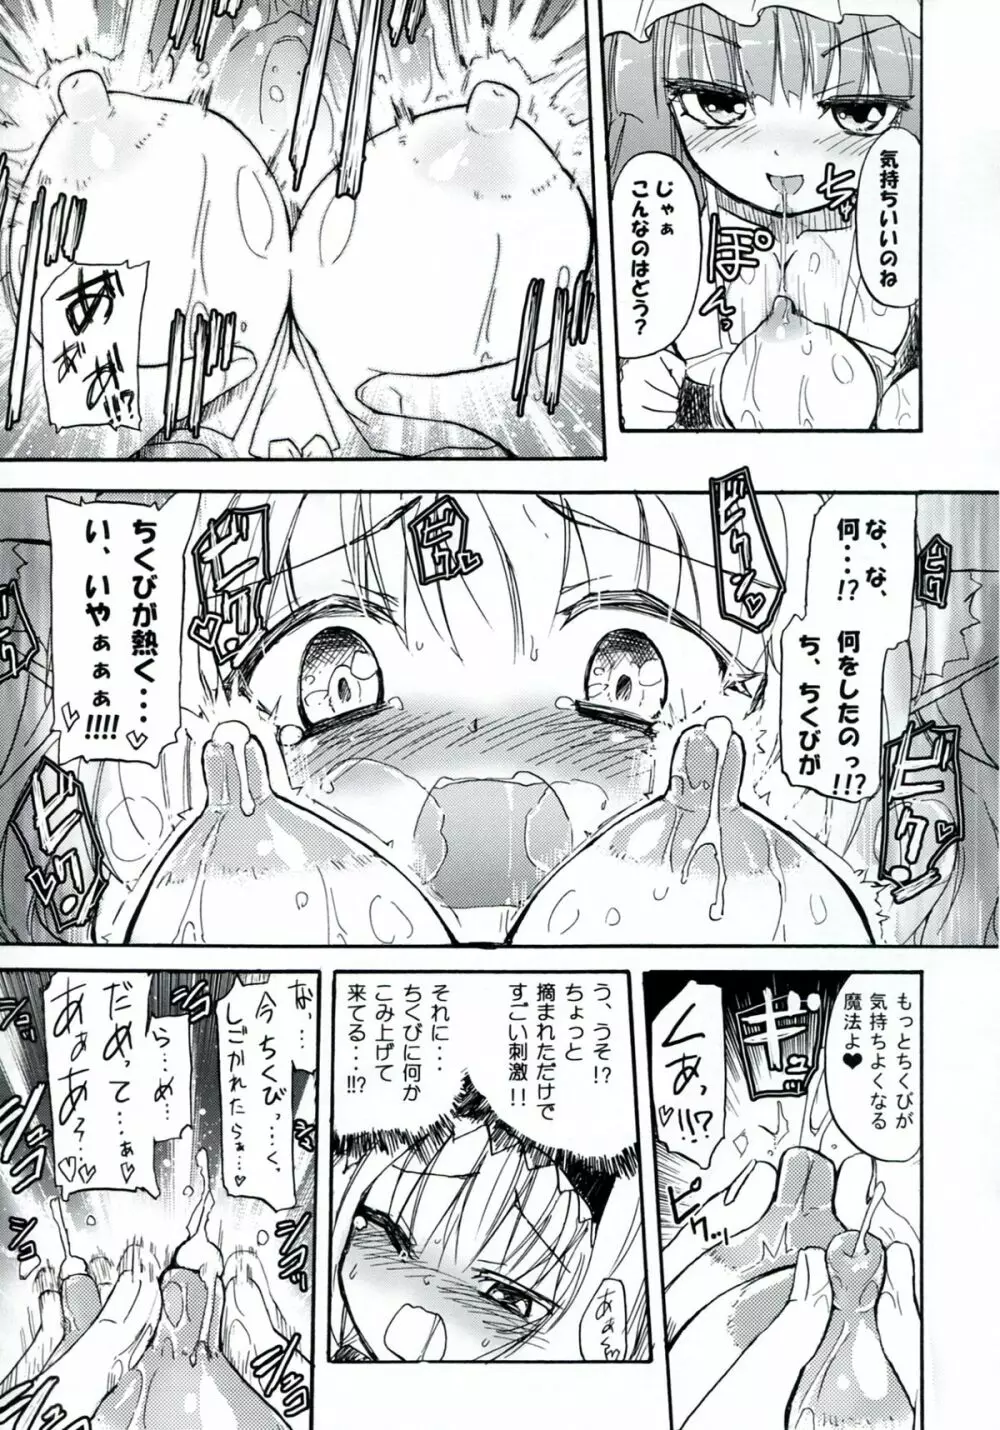 Homuraya Milk ★ Collection 2 - page19